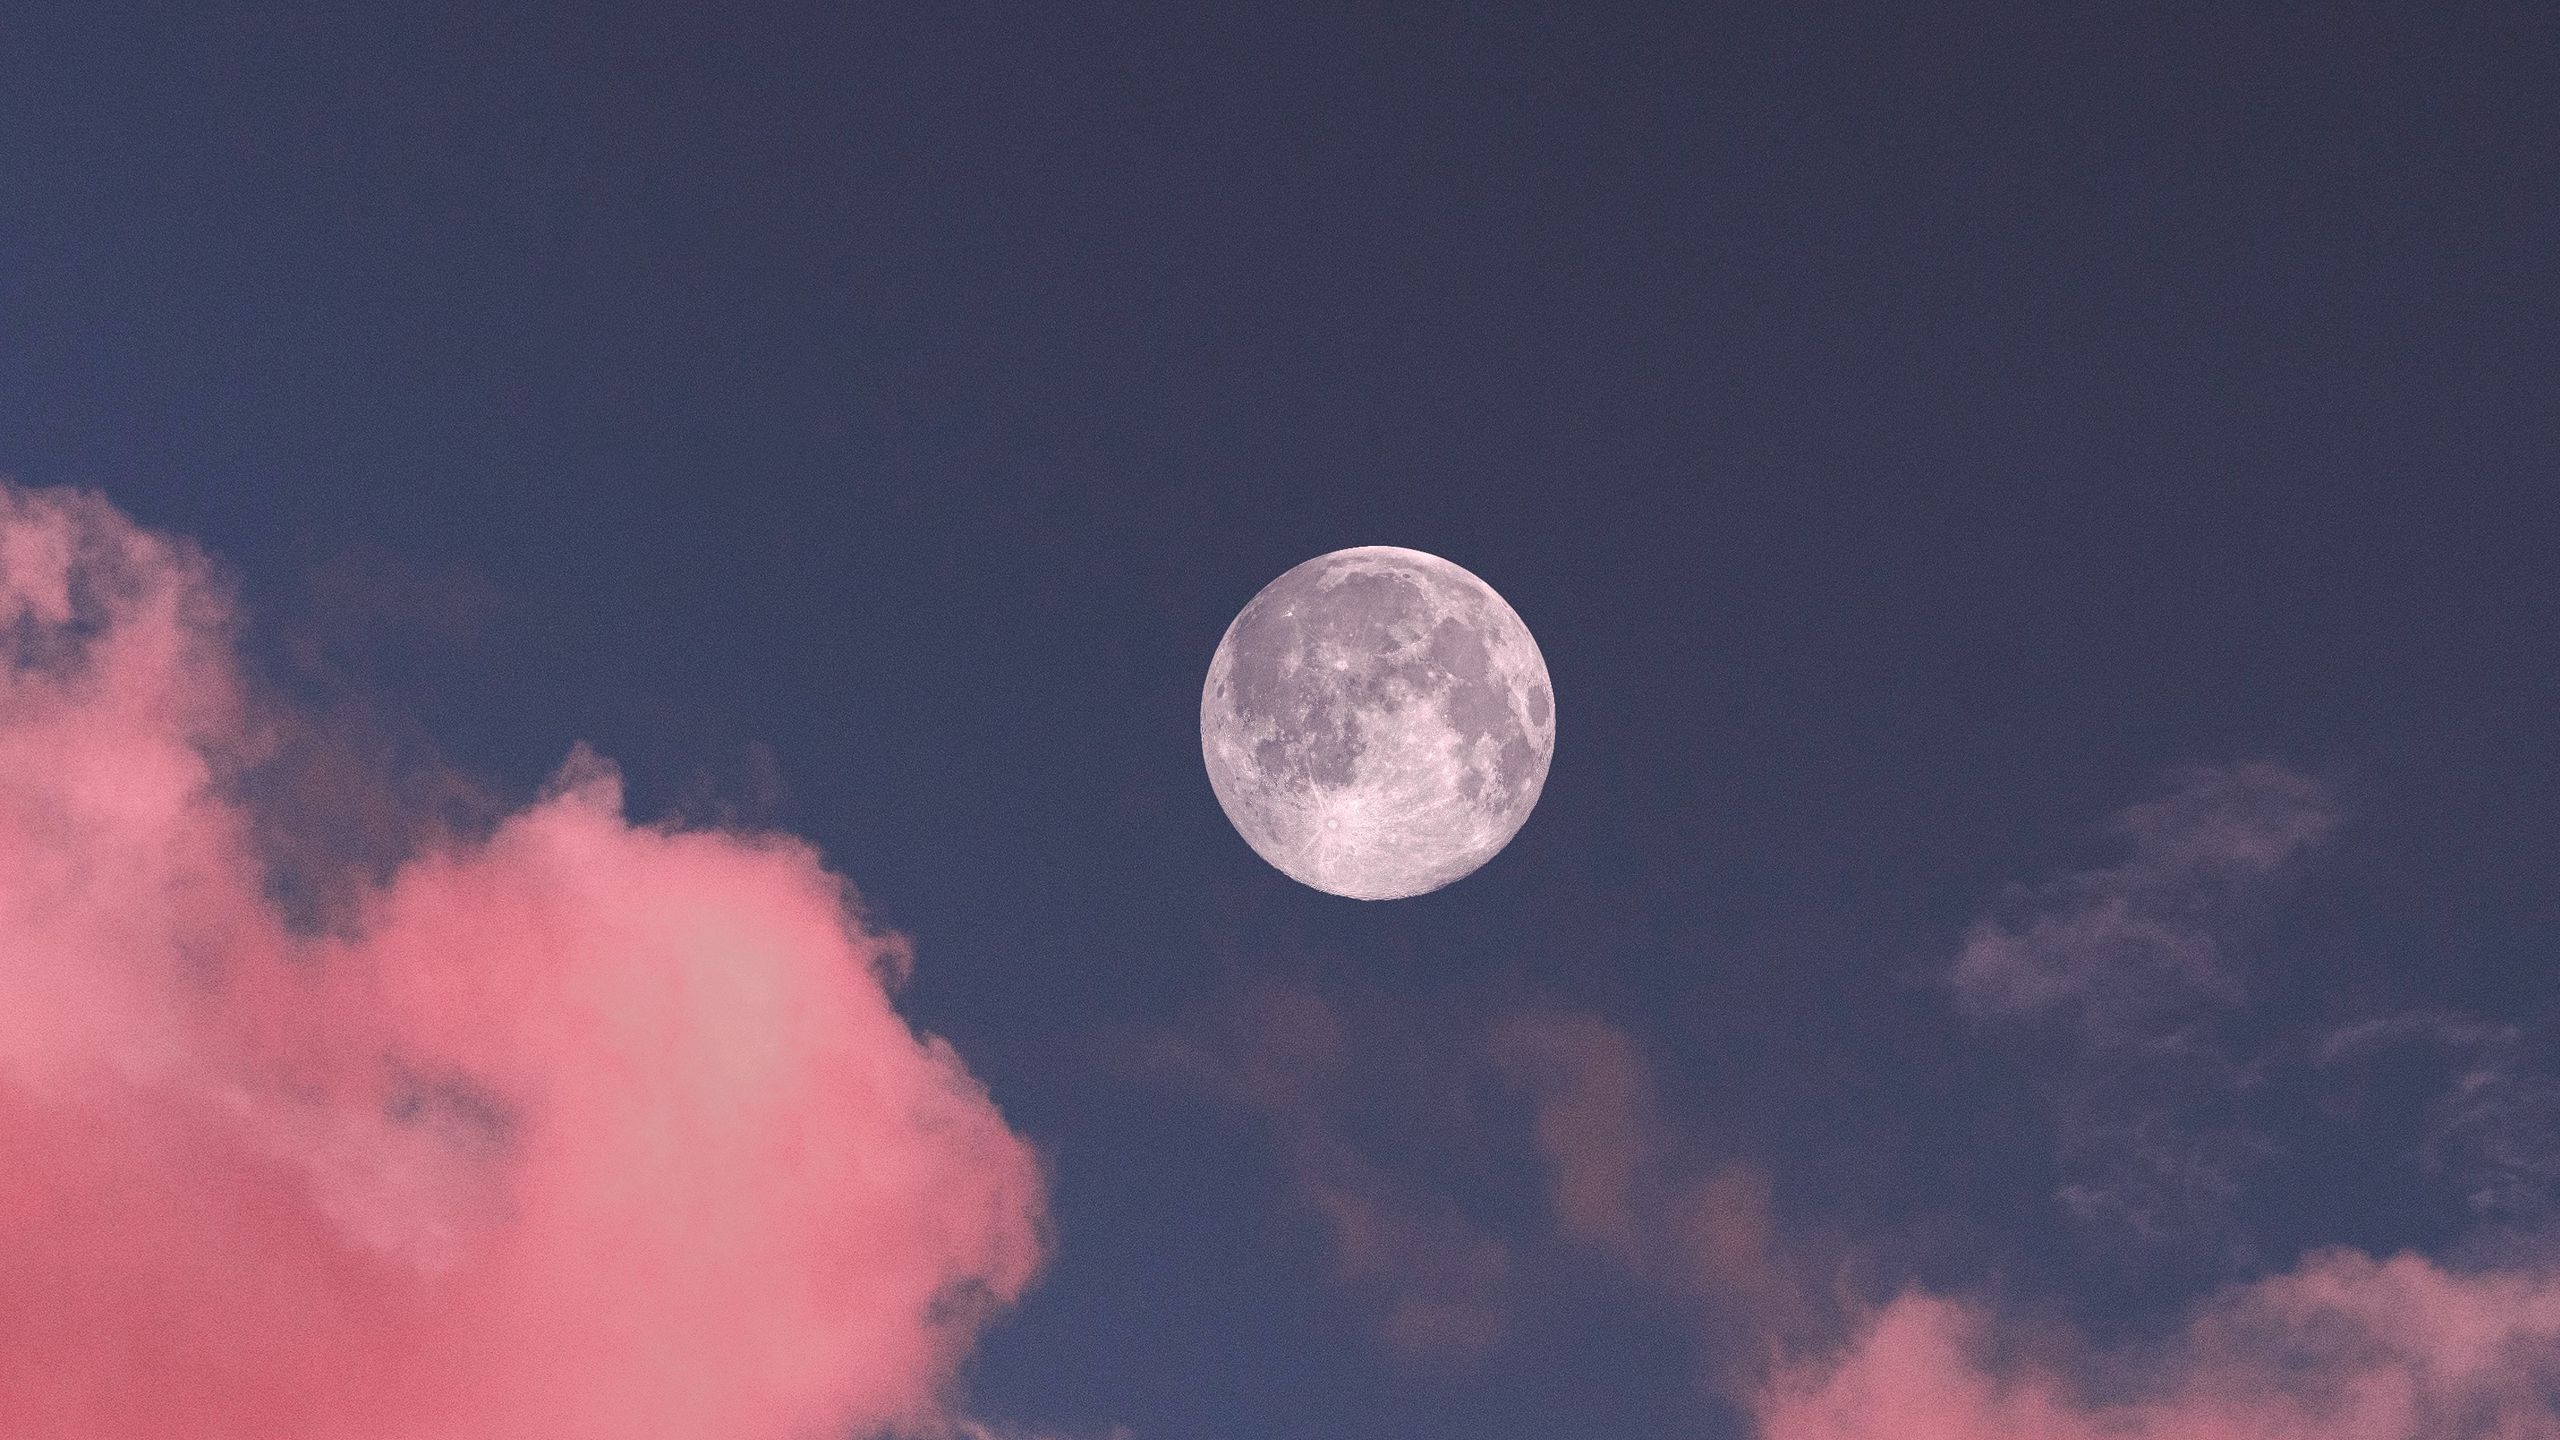 Download wallpaper 2560x1440 moon, clouds, pink, sky, full moon